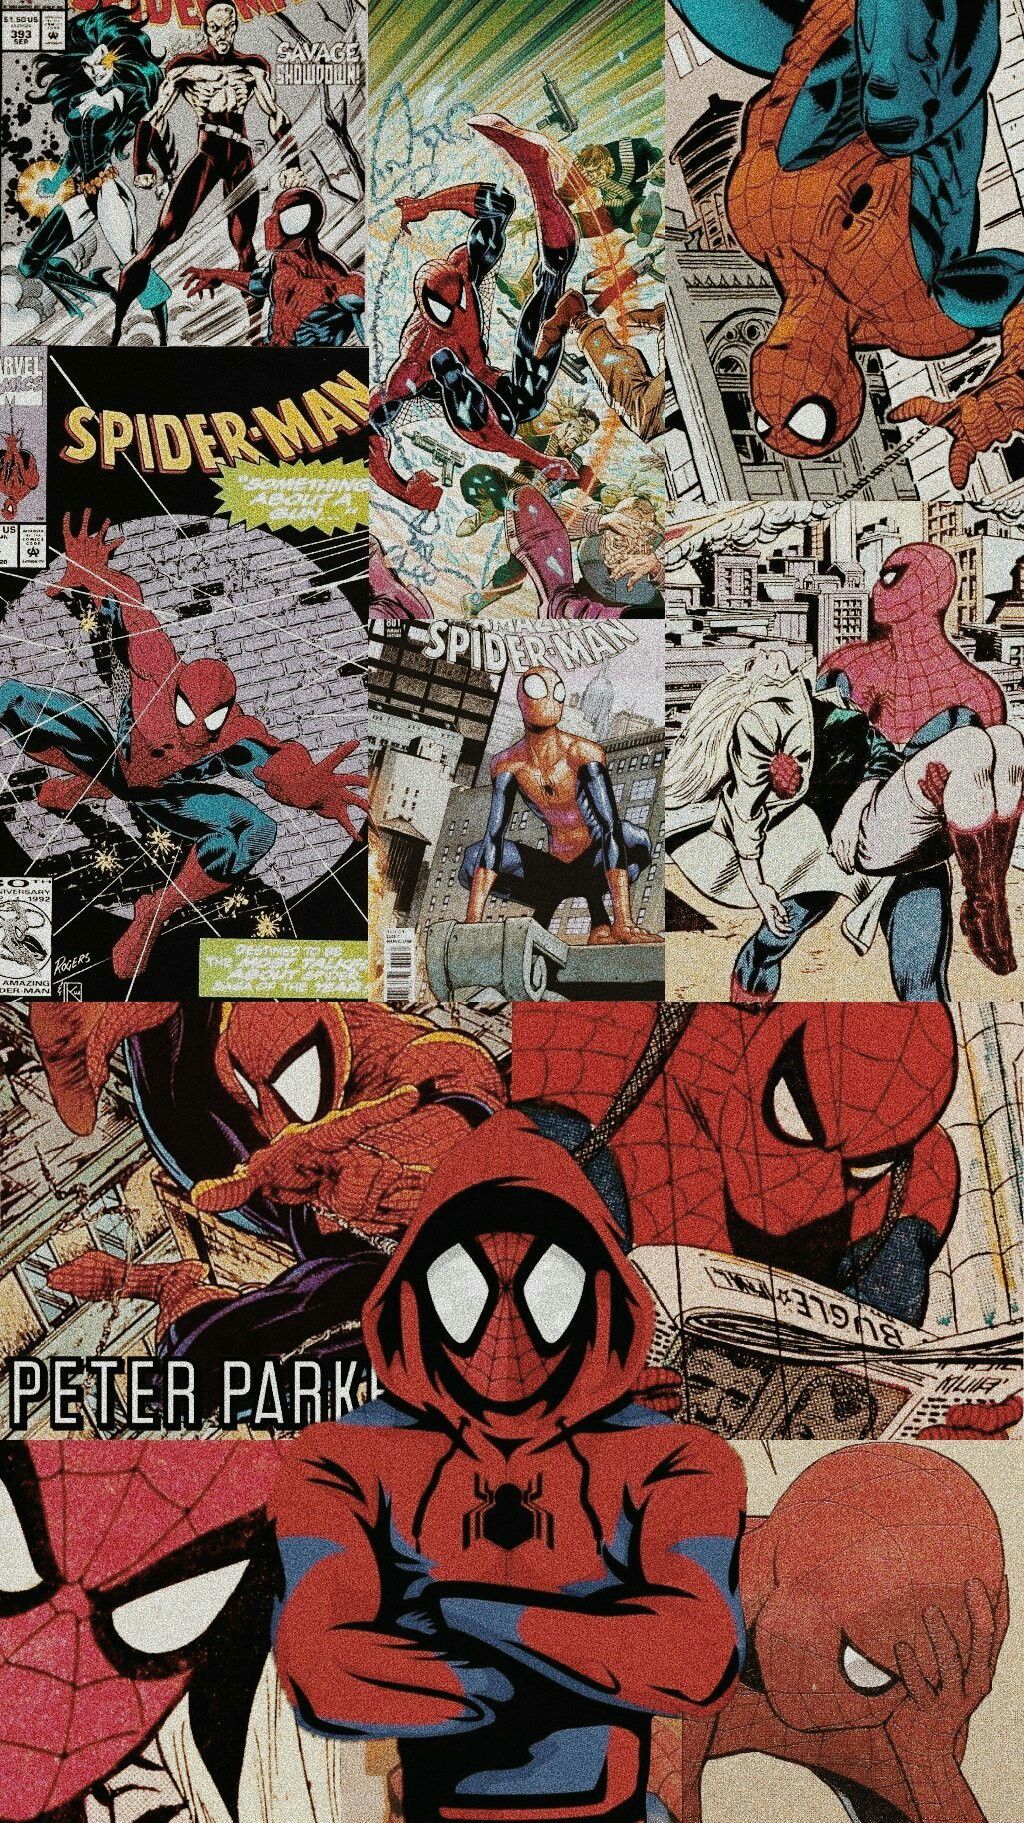 Spider Man Aesthetic Wallpaper